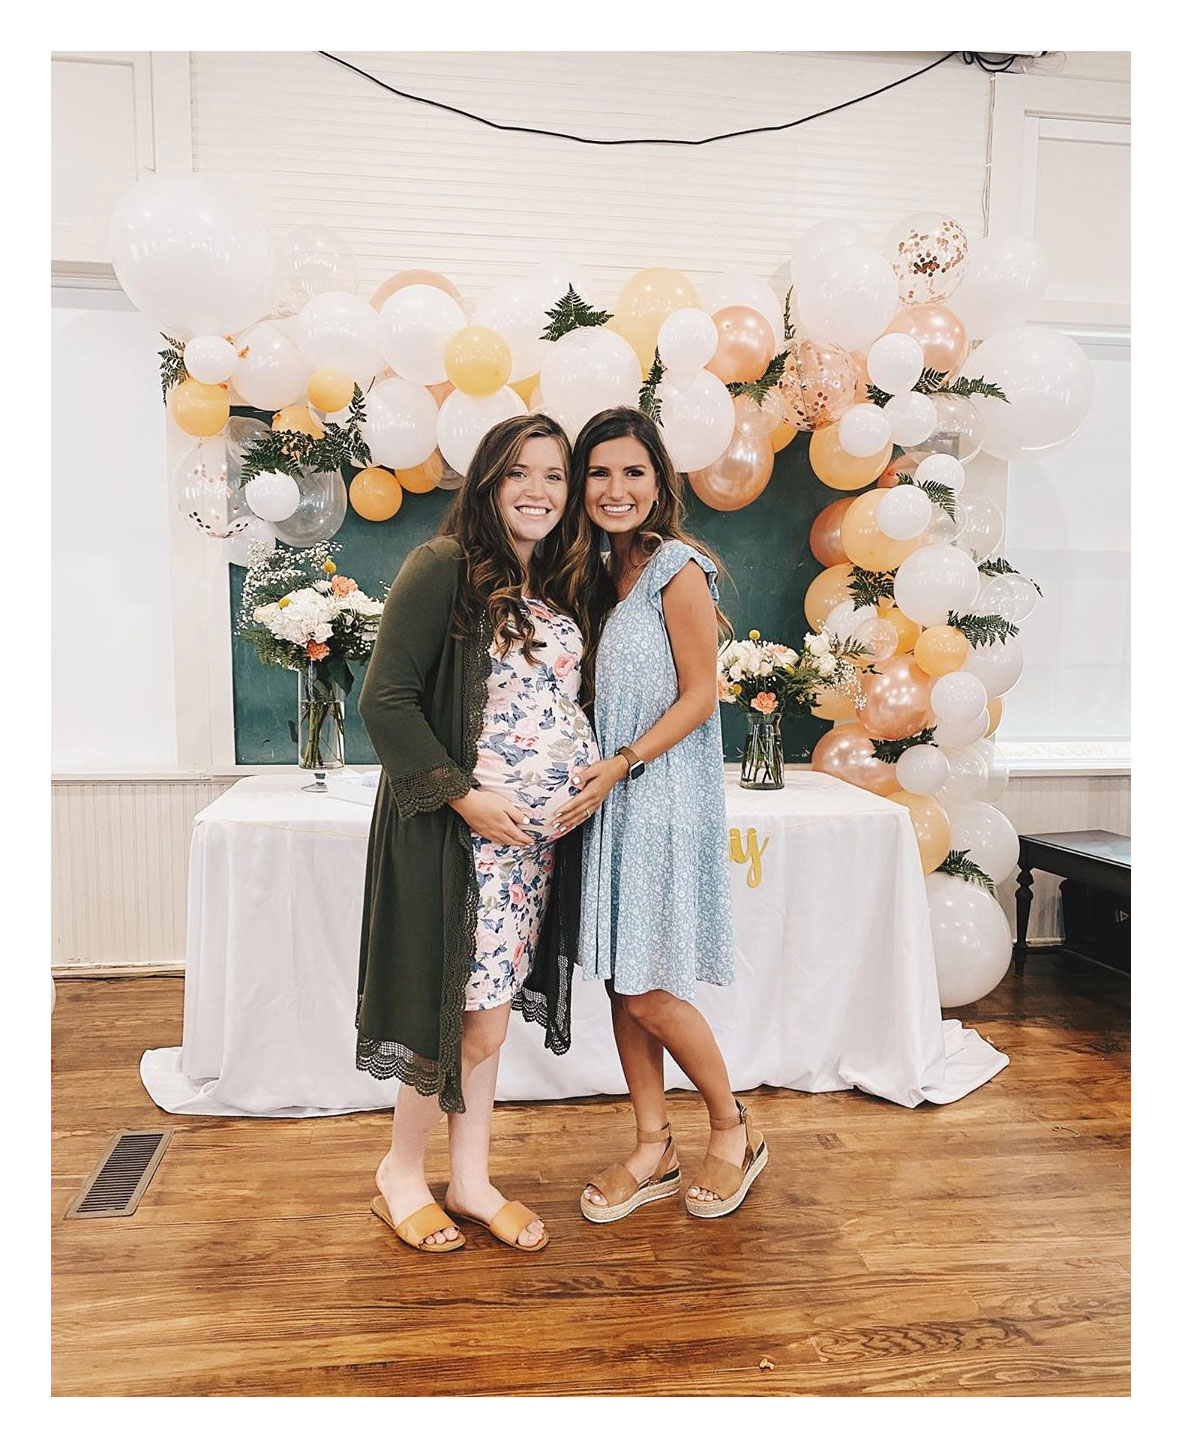 Joy-Anna Duggar and Carlin Bates Baby Shower Instagram